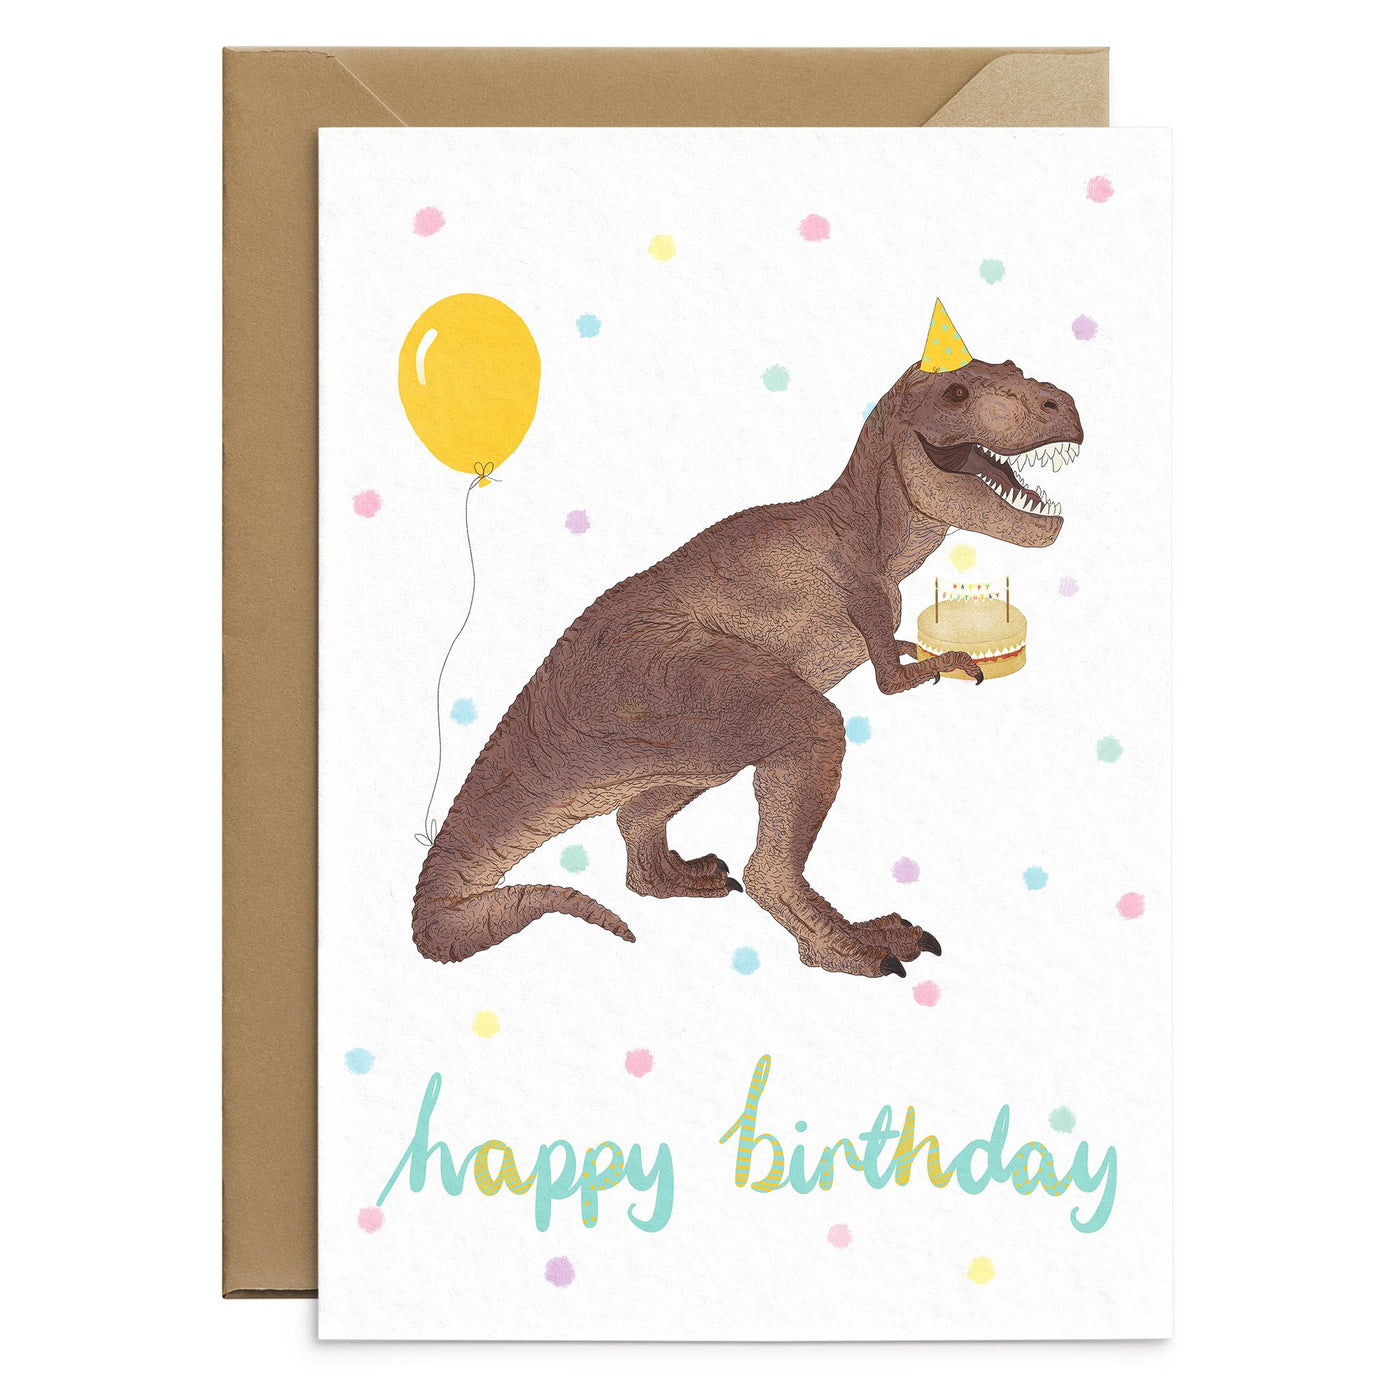 T-Rex Dinosaur Birthday Card - Poppins & Co.